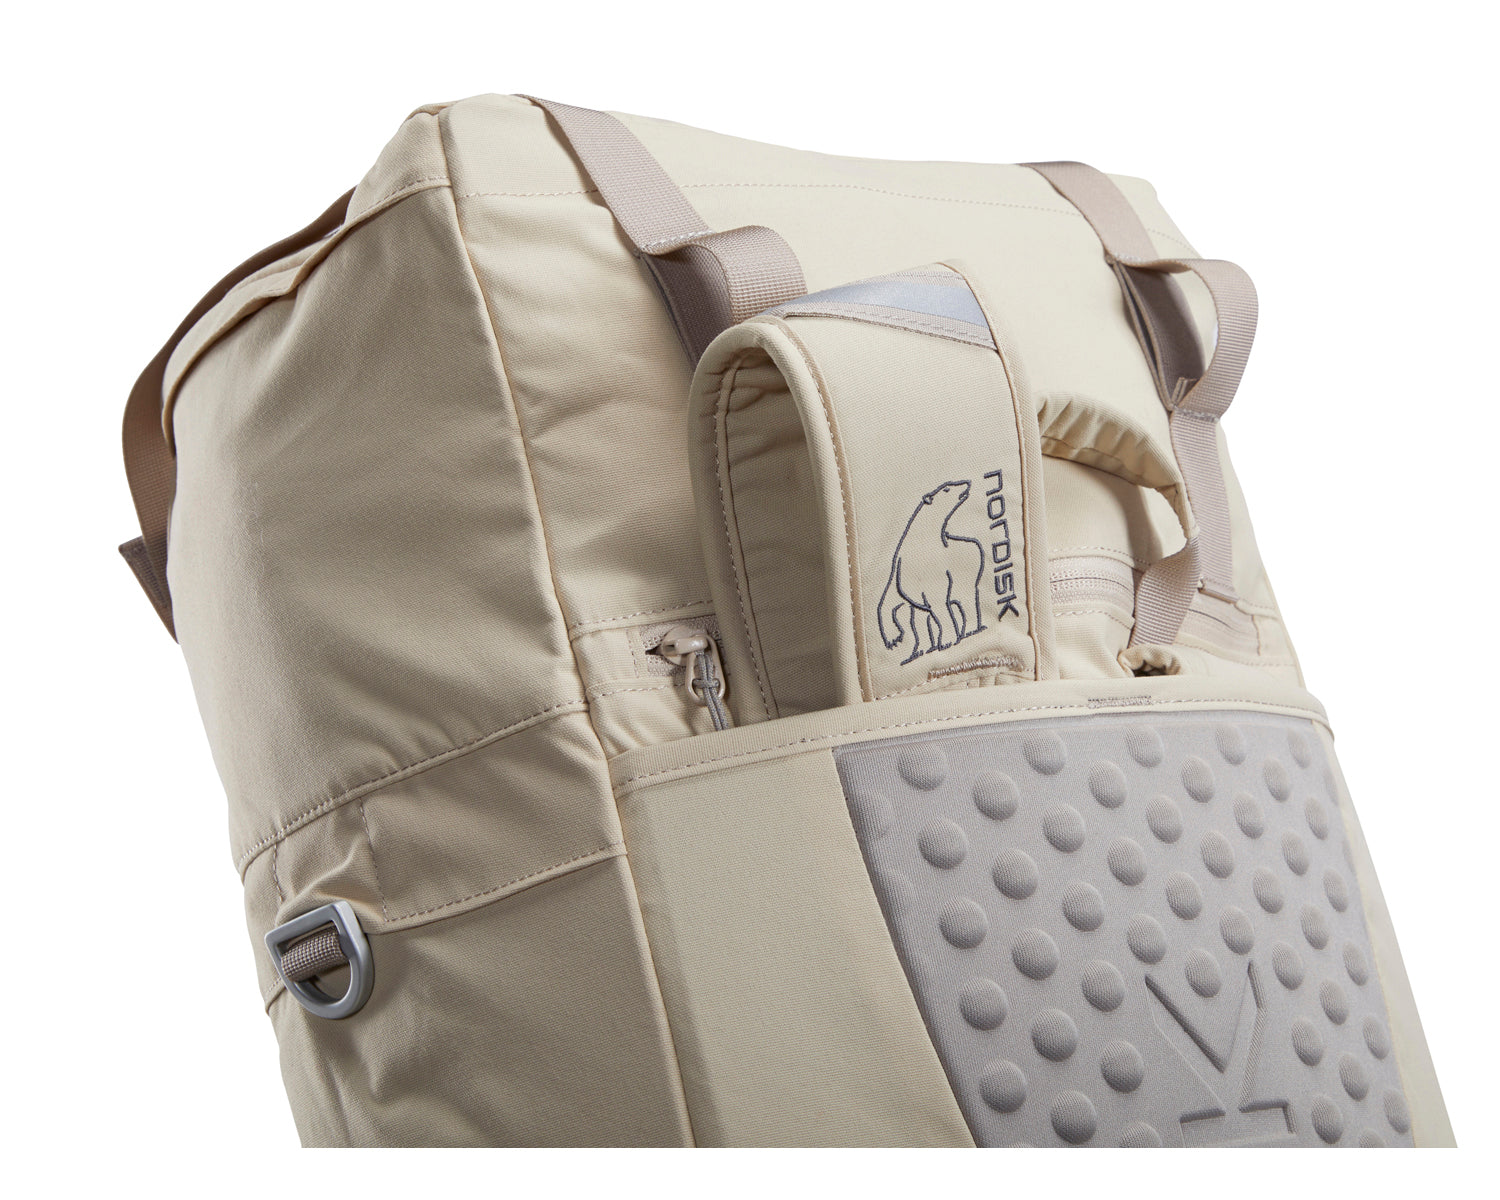 Yggdrasil backpack - 22-37 L - Sand